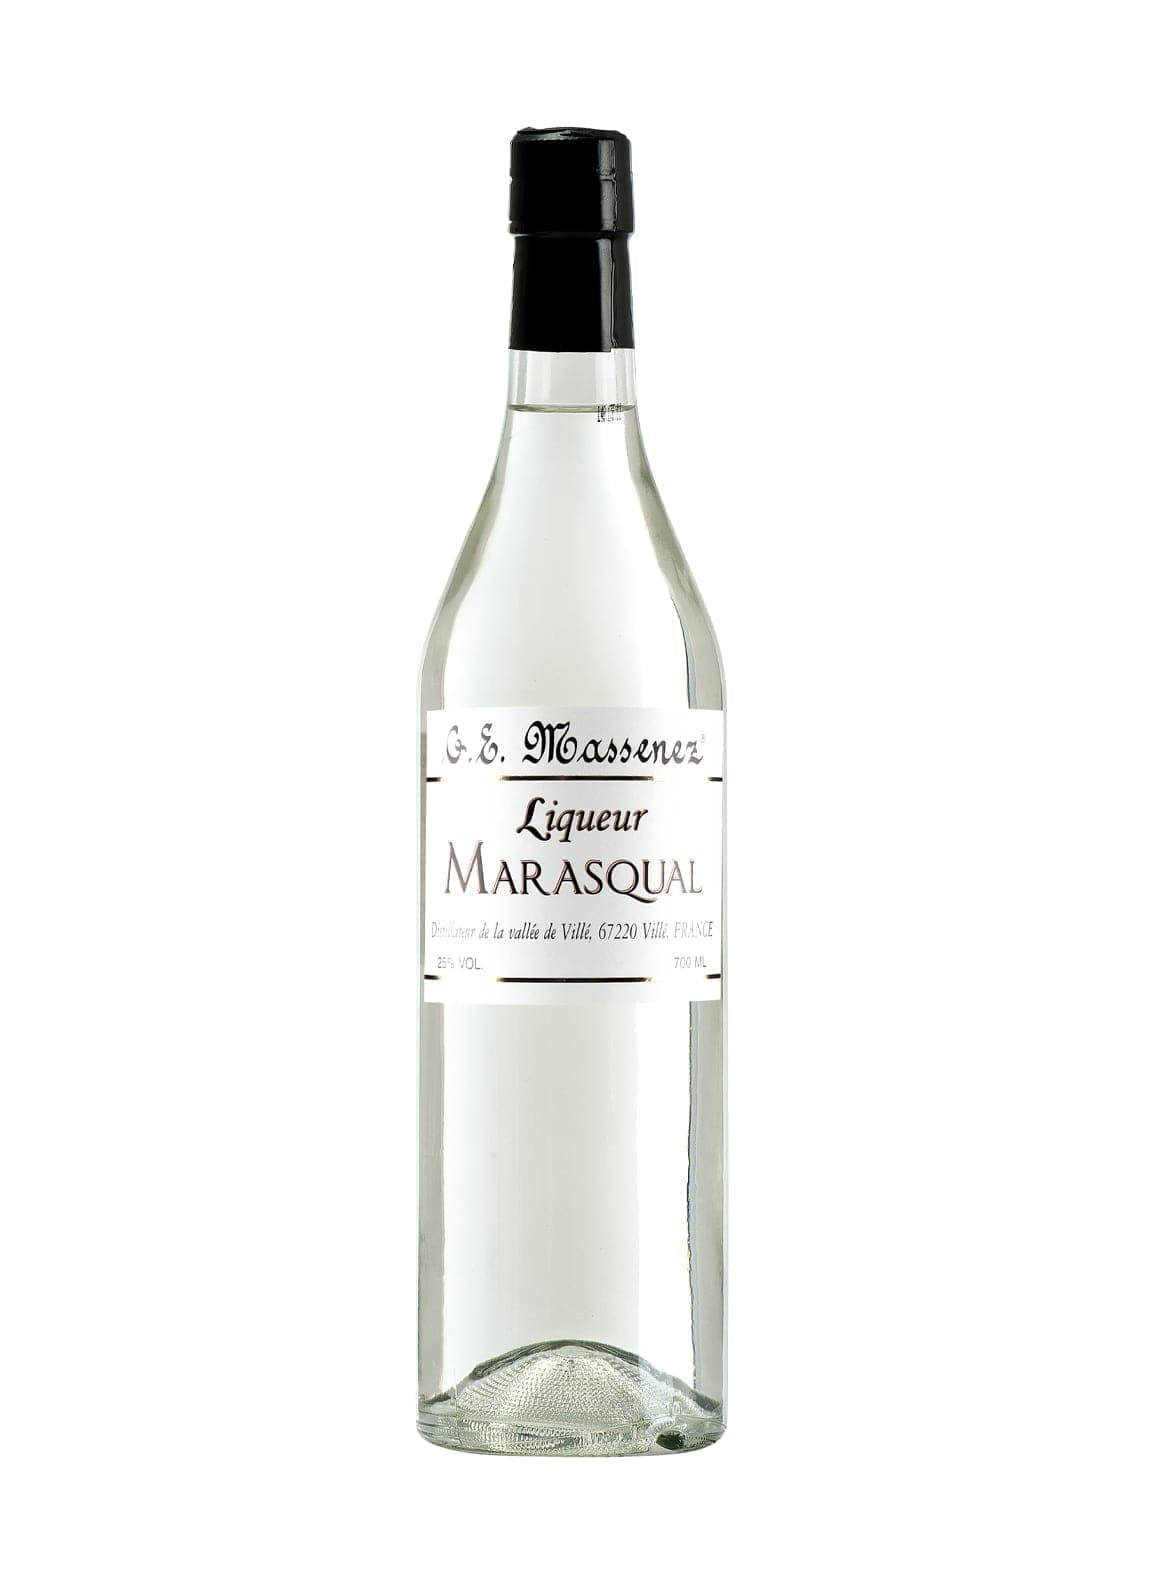 Massenez Maraschino (Marasqual) Liqueur 25% 700ml | Liqueurs | Shop online at Spirits of France